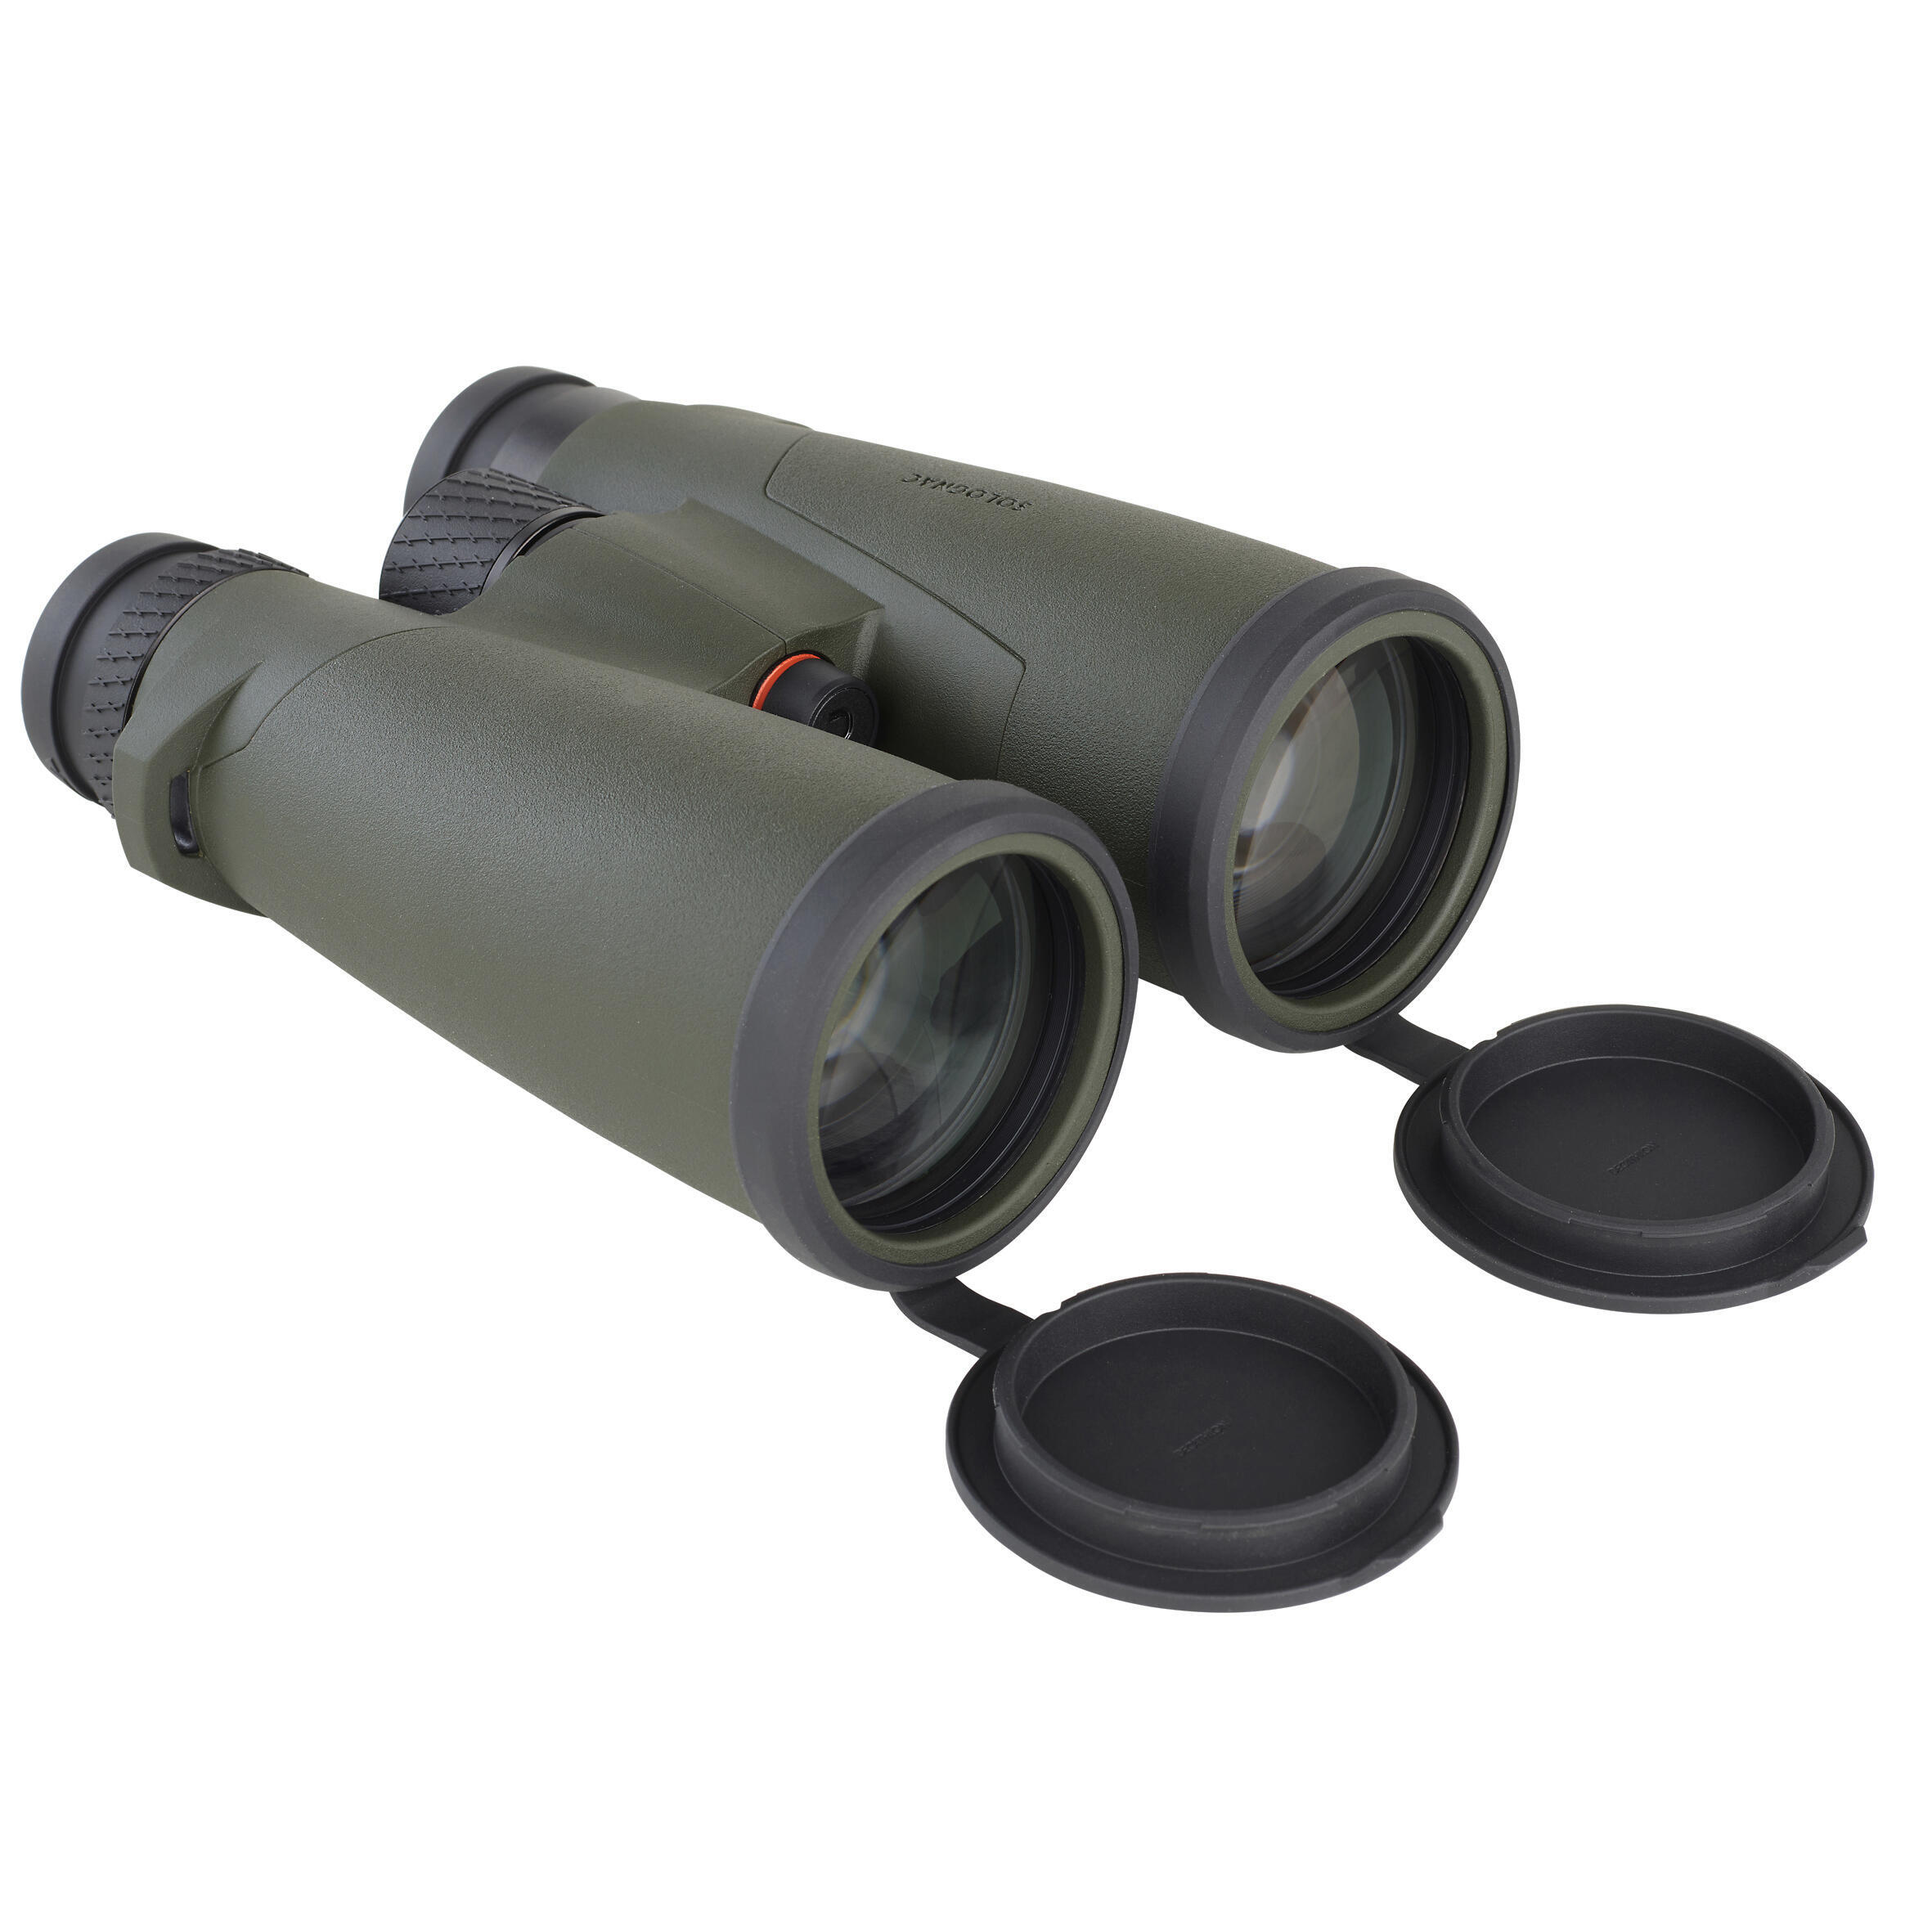 Waterproof hunting binoculars 900 8x56 - khaki 2/11